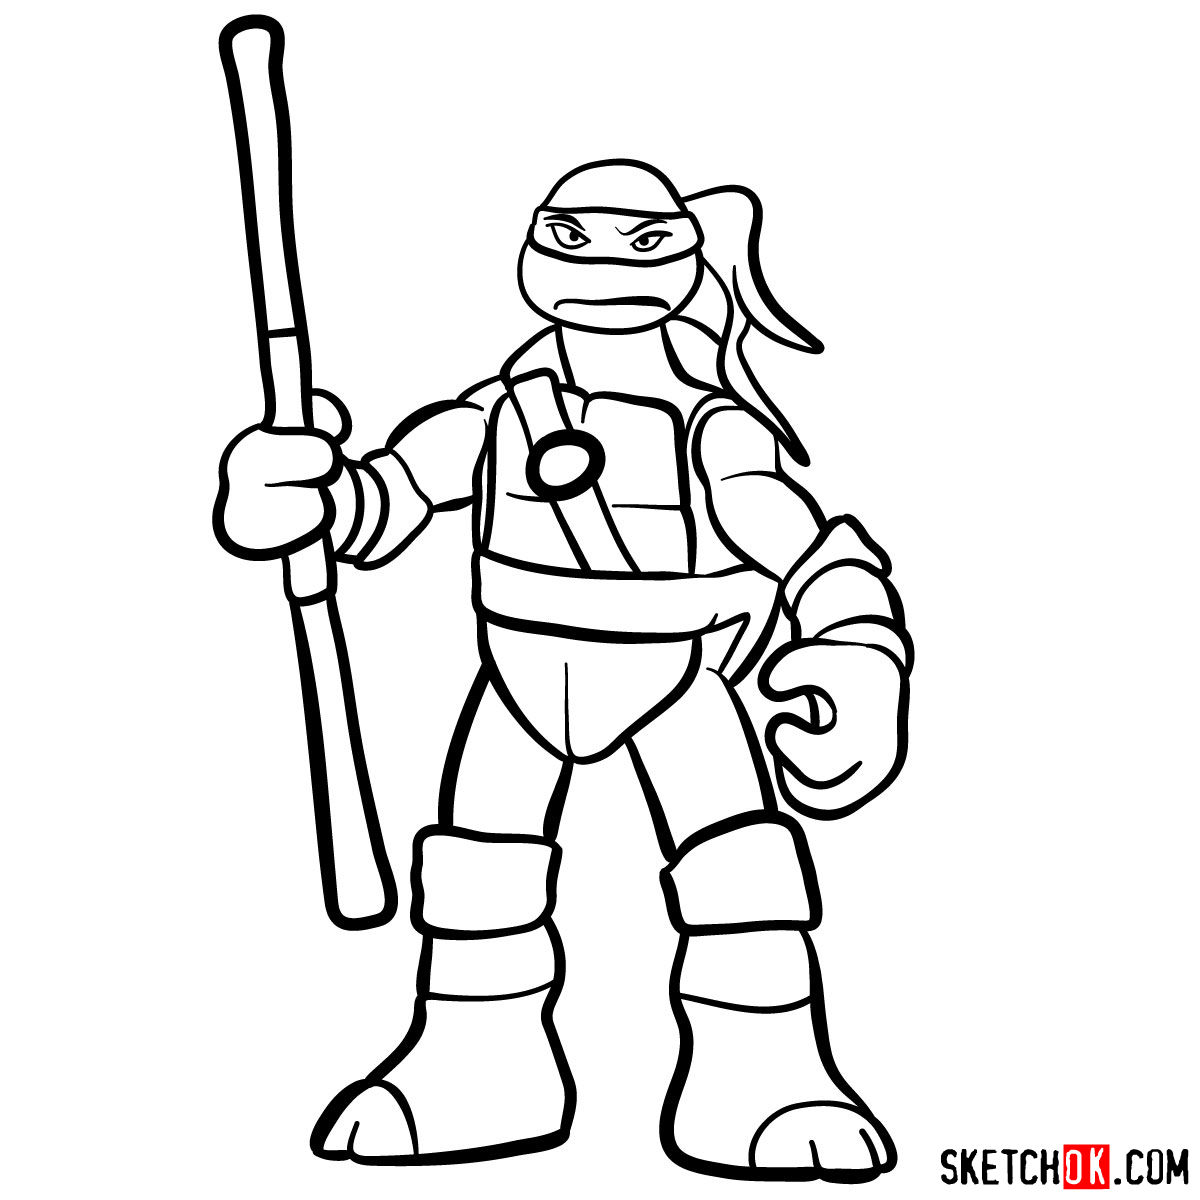 How to draw Donatello ninja turtle toy